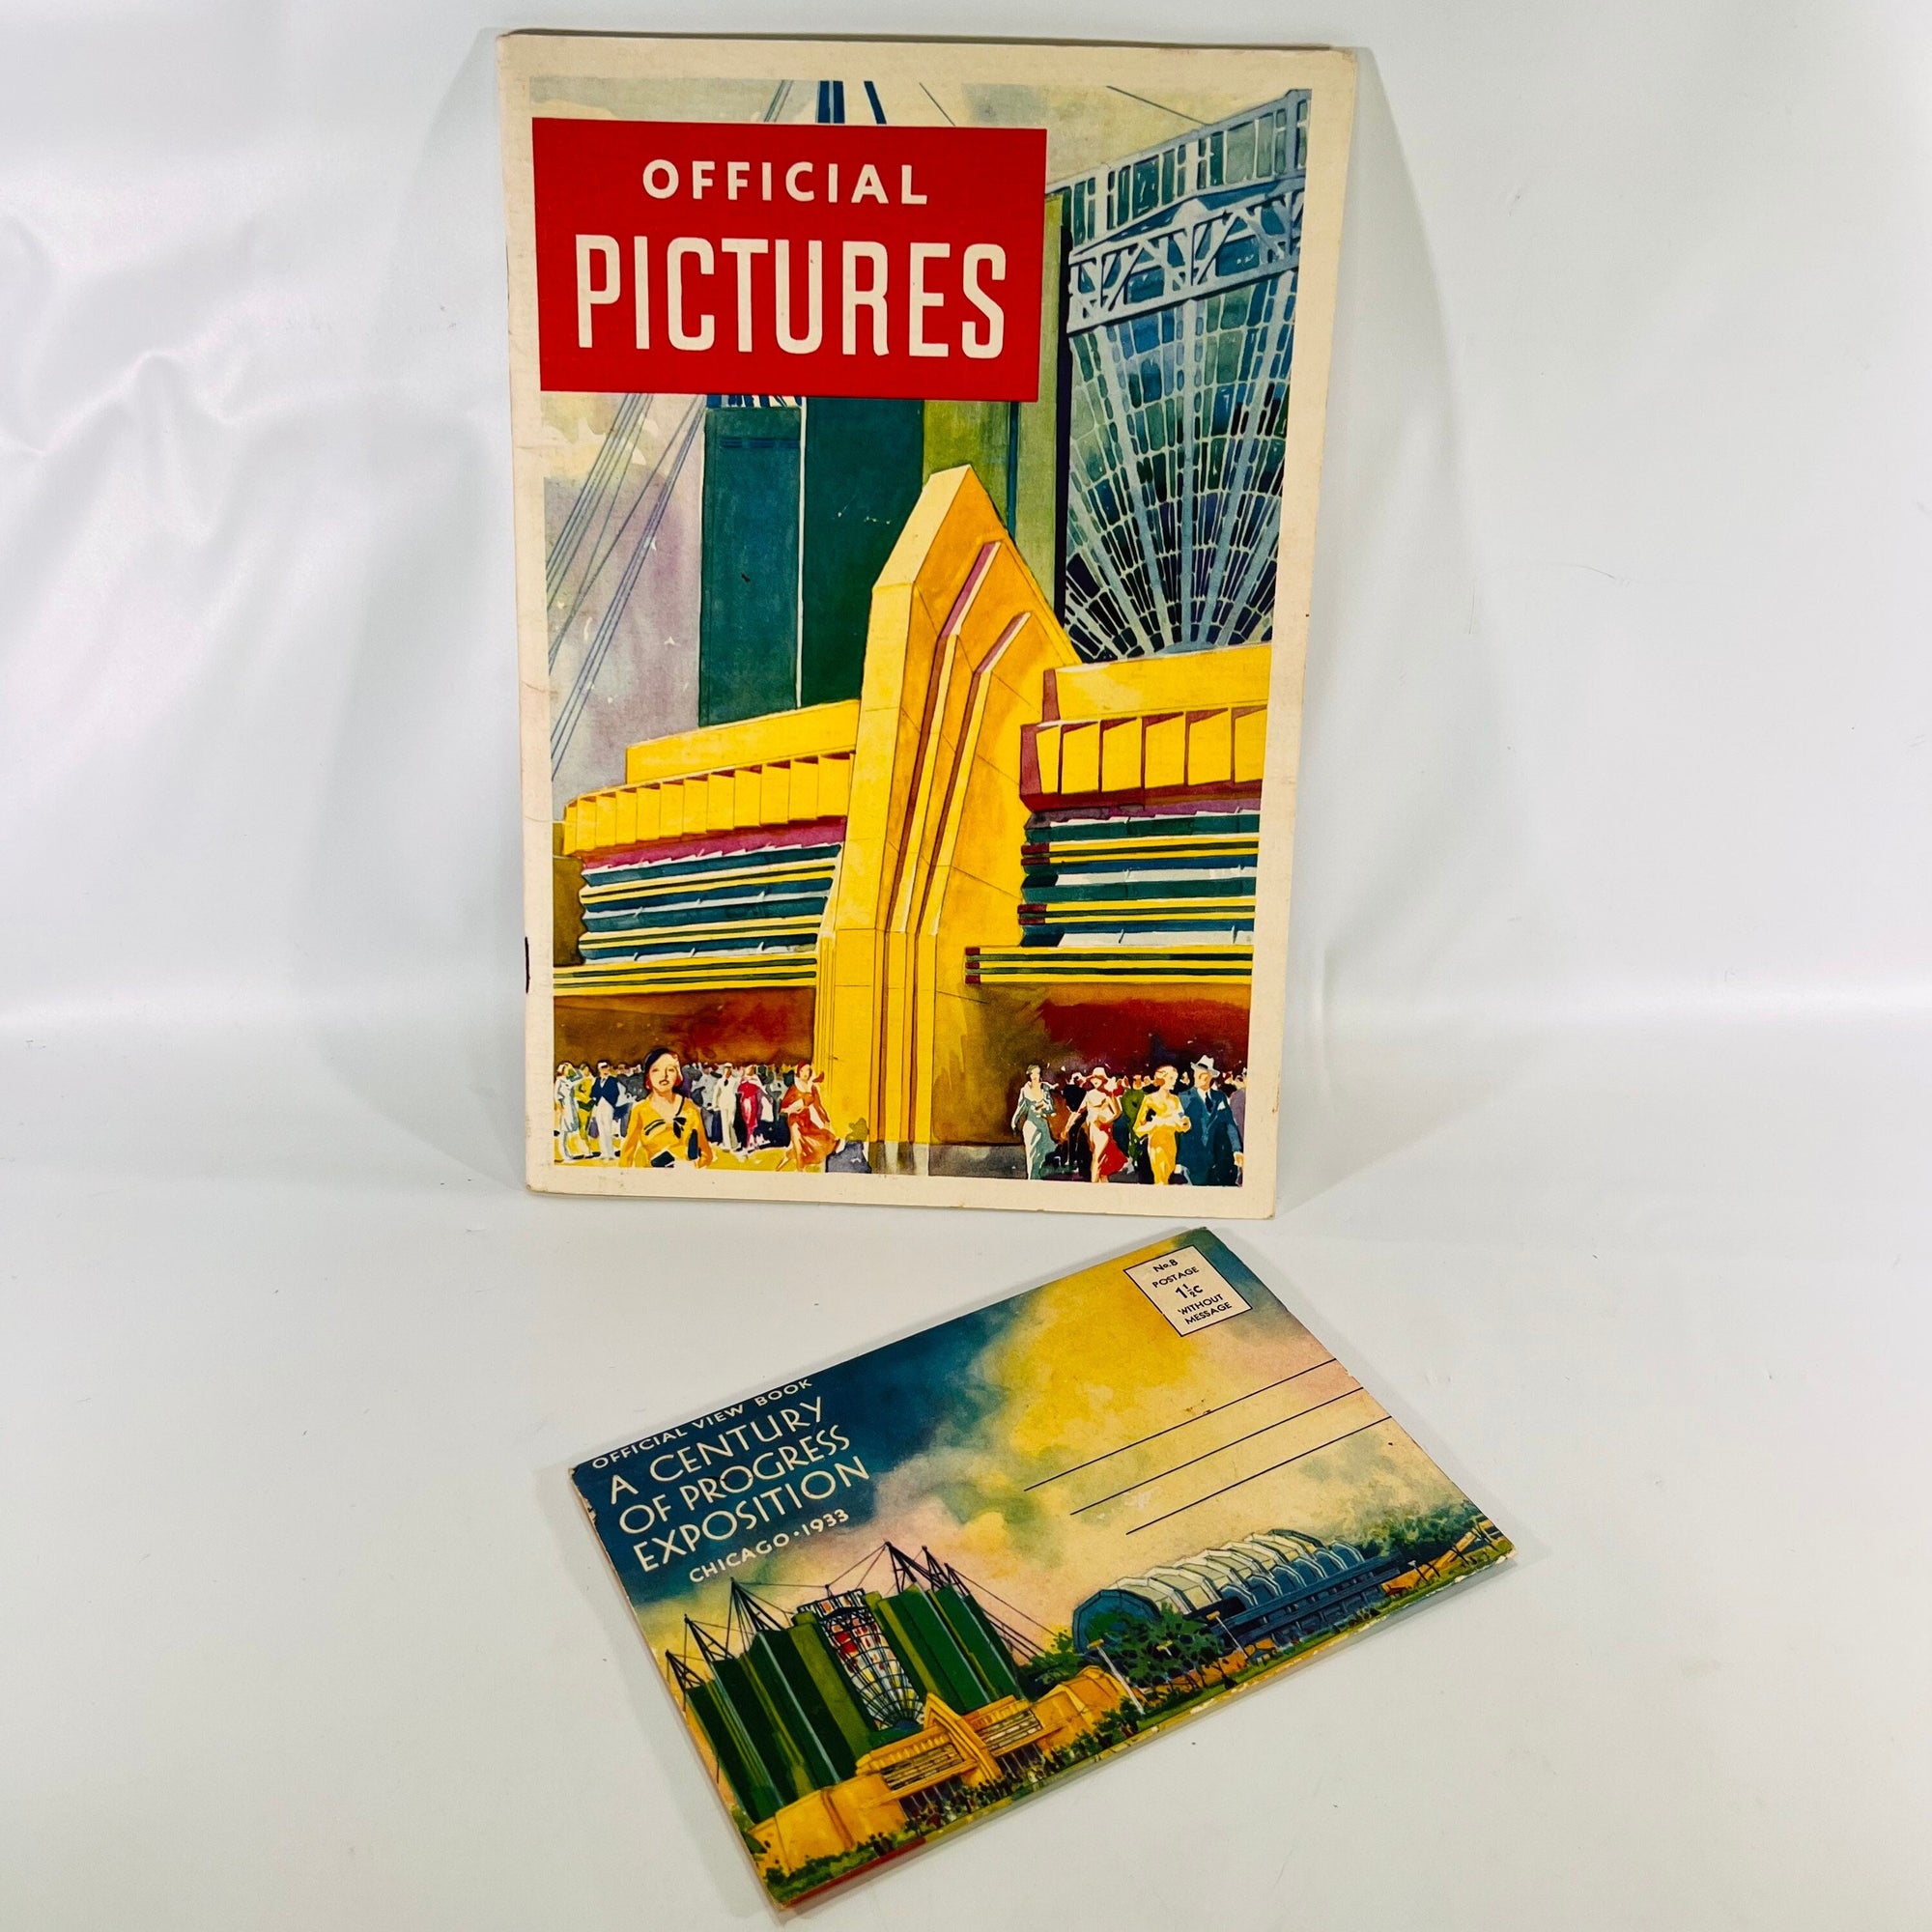 World's Fair Official Pictures & Official View Book A Century of Progress 1933 Reuben H Donnelly Corp Chicago Illinois Vintage Memorabilia